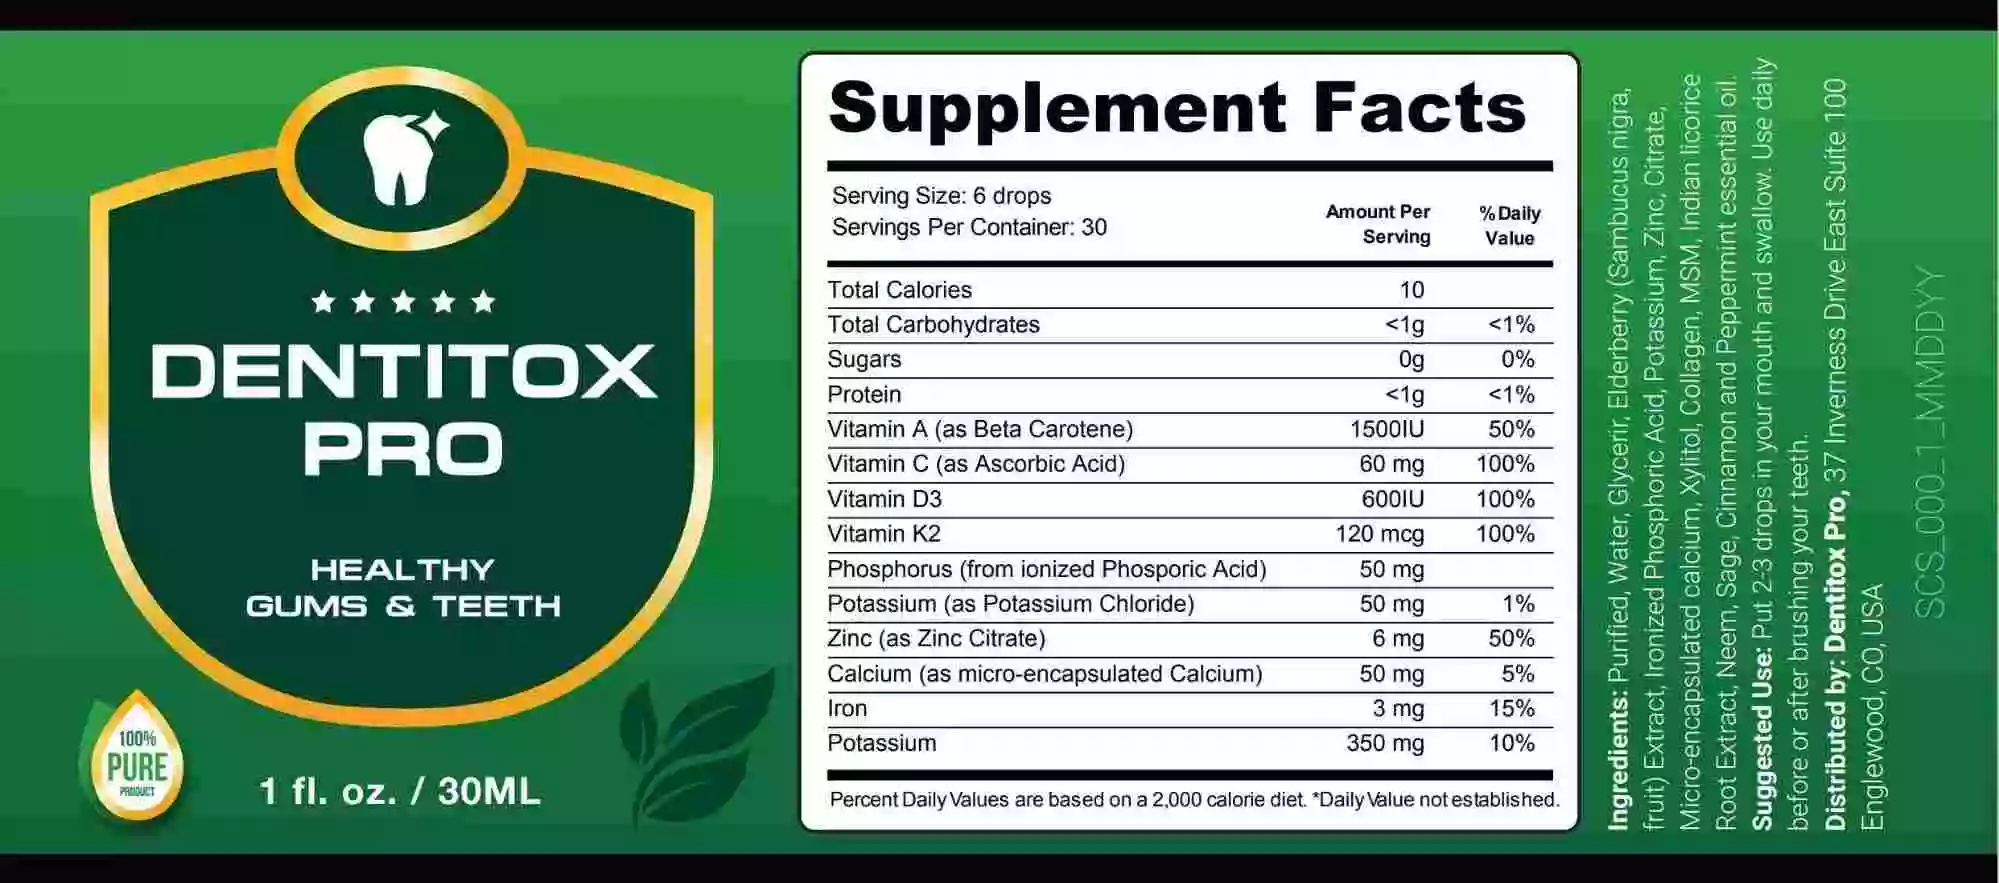 Dentitox Pro health supplements